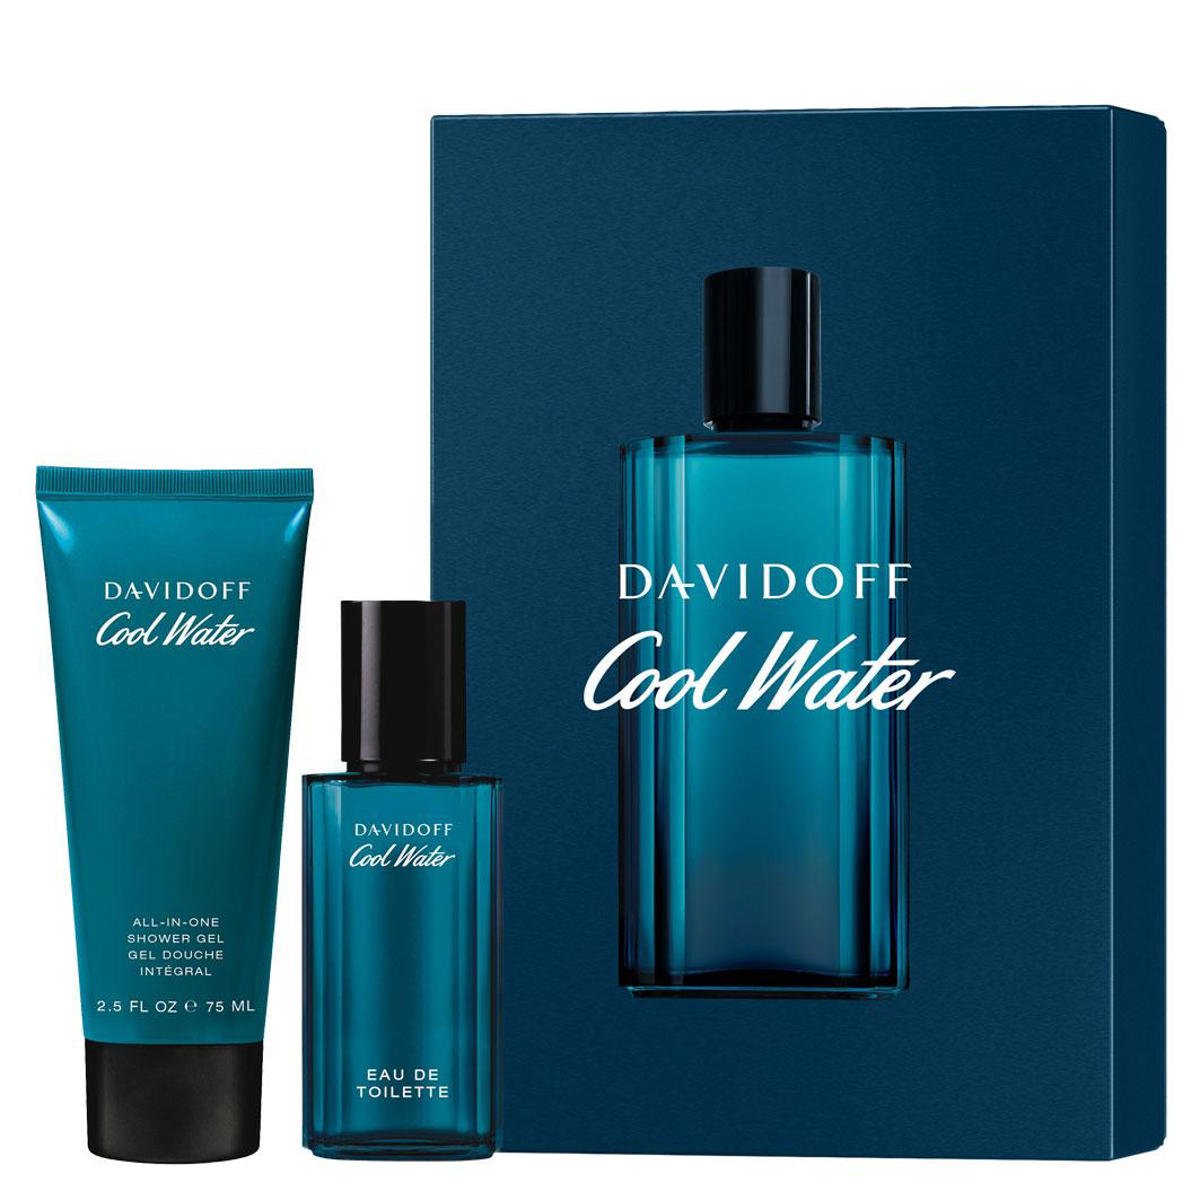 Davidoff Cool Water EDT Shower Set | My Perfume Shop Australia